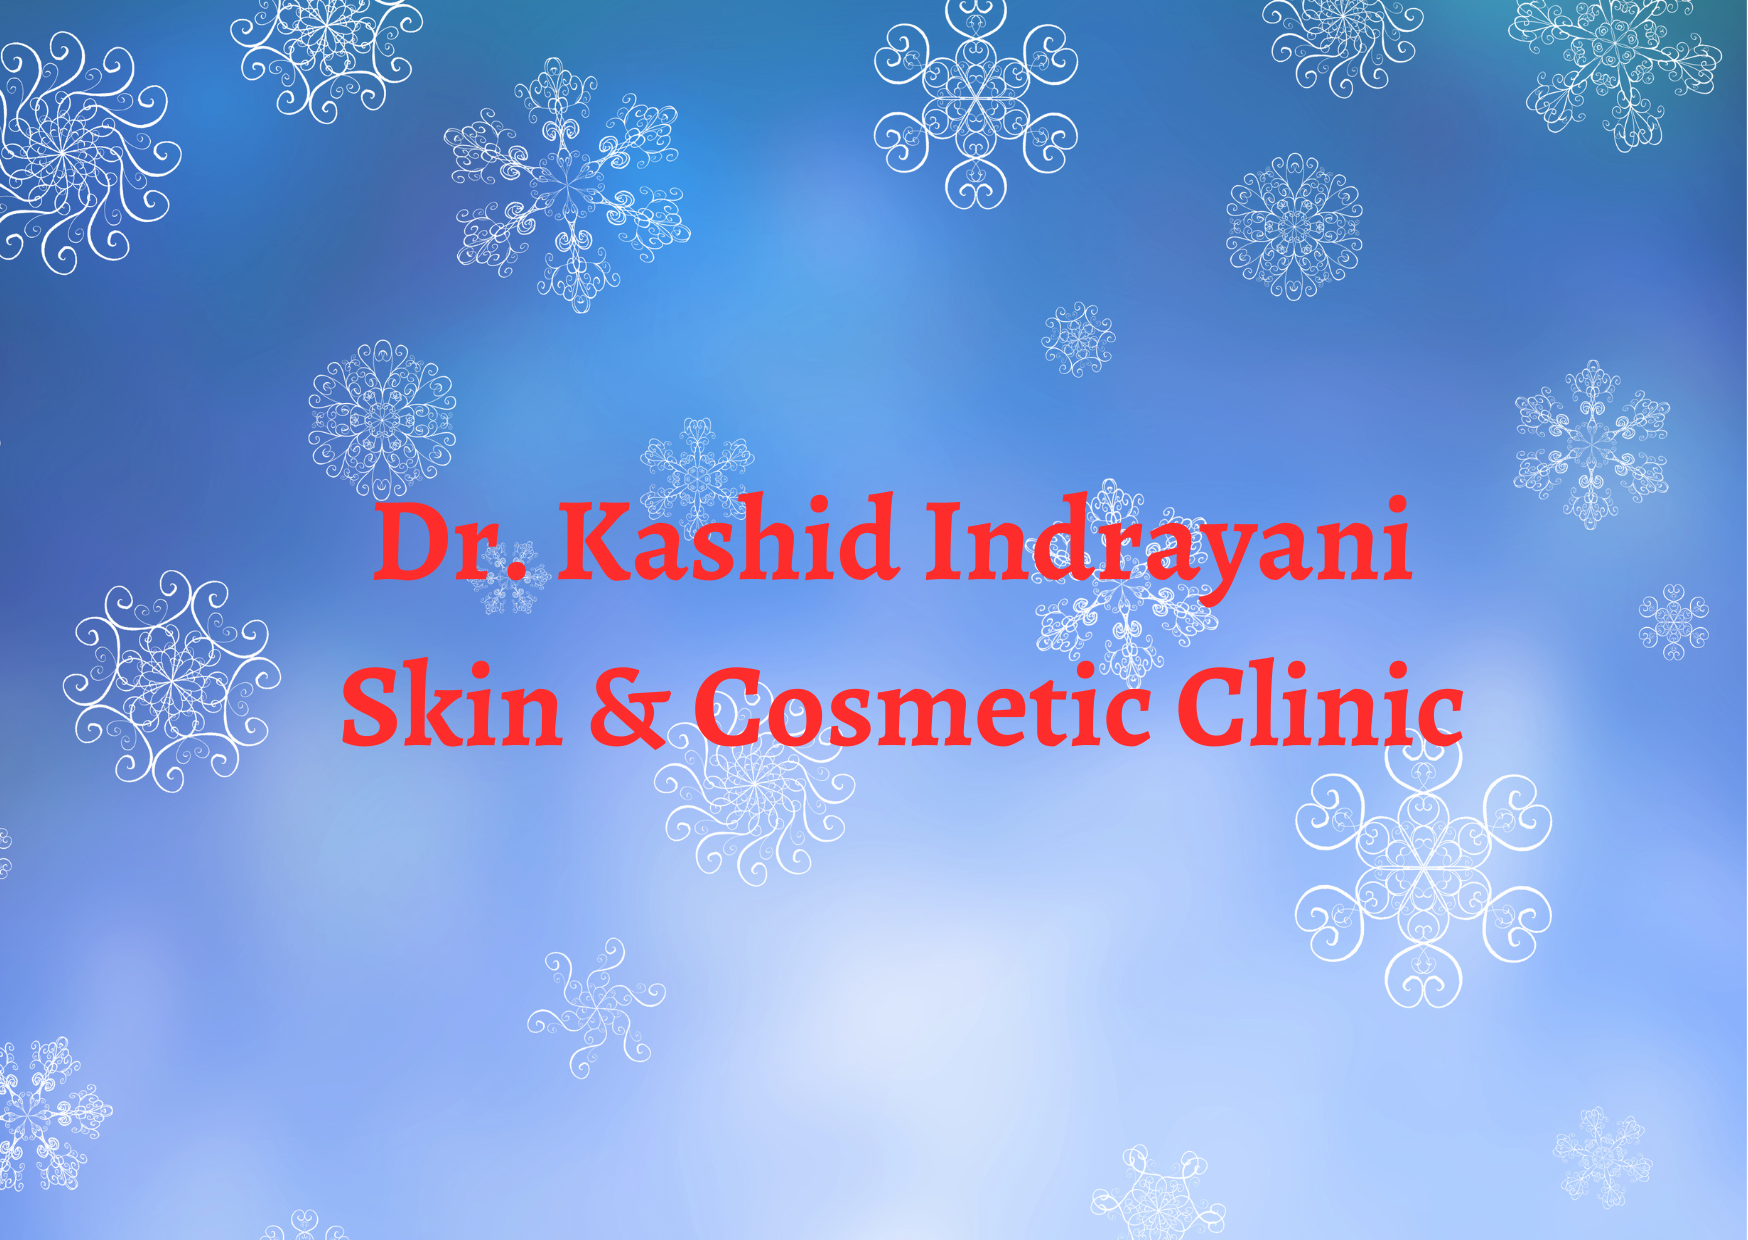 Dr. Kashid Indrayani Skin & Cosmetic Clinic,   